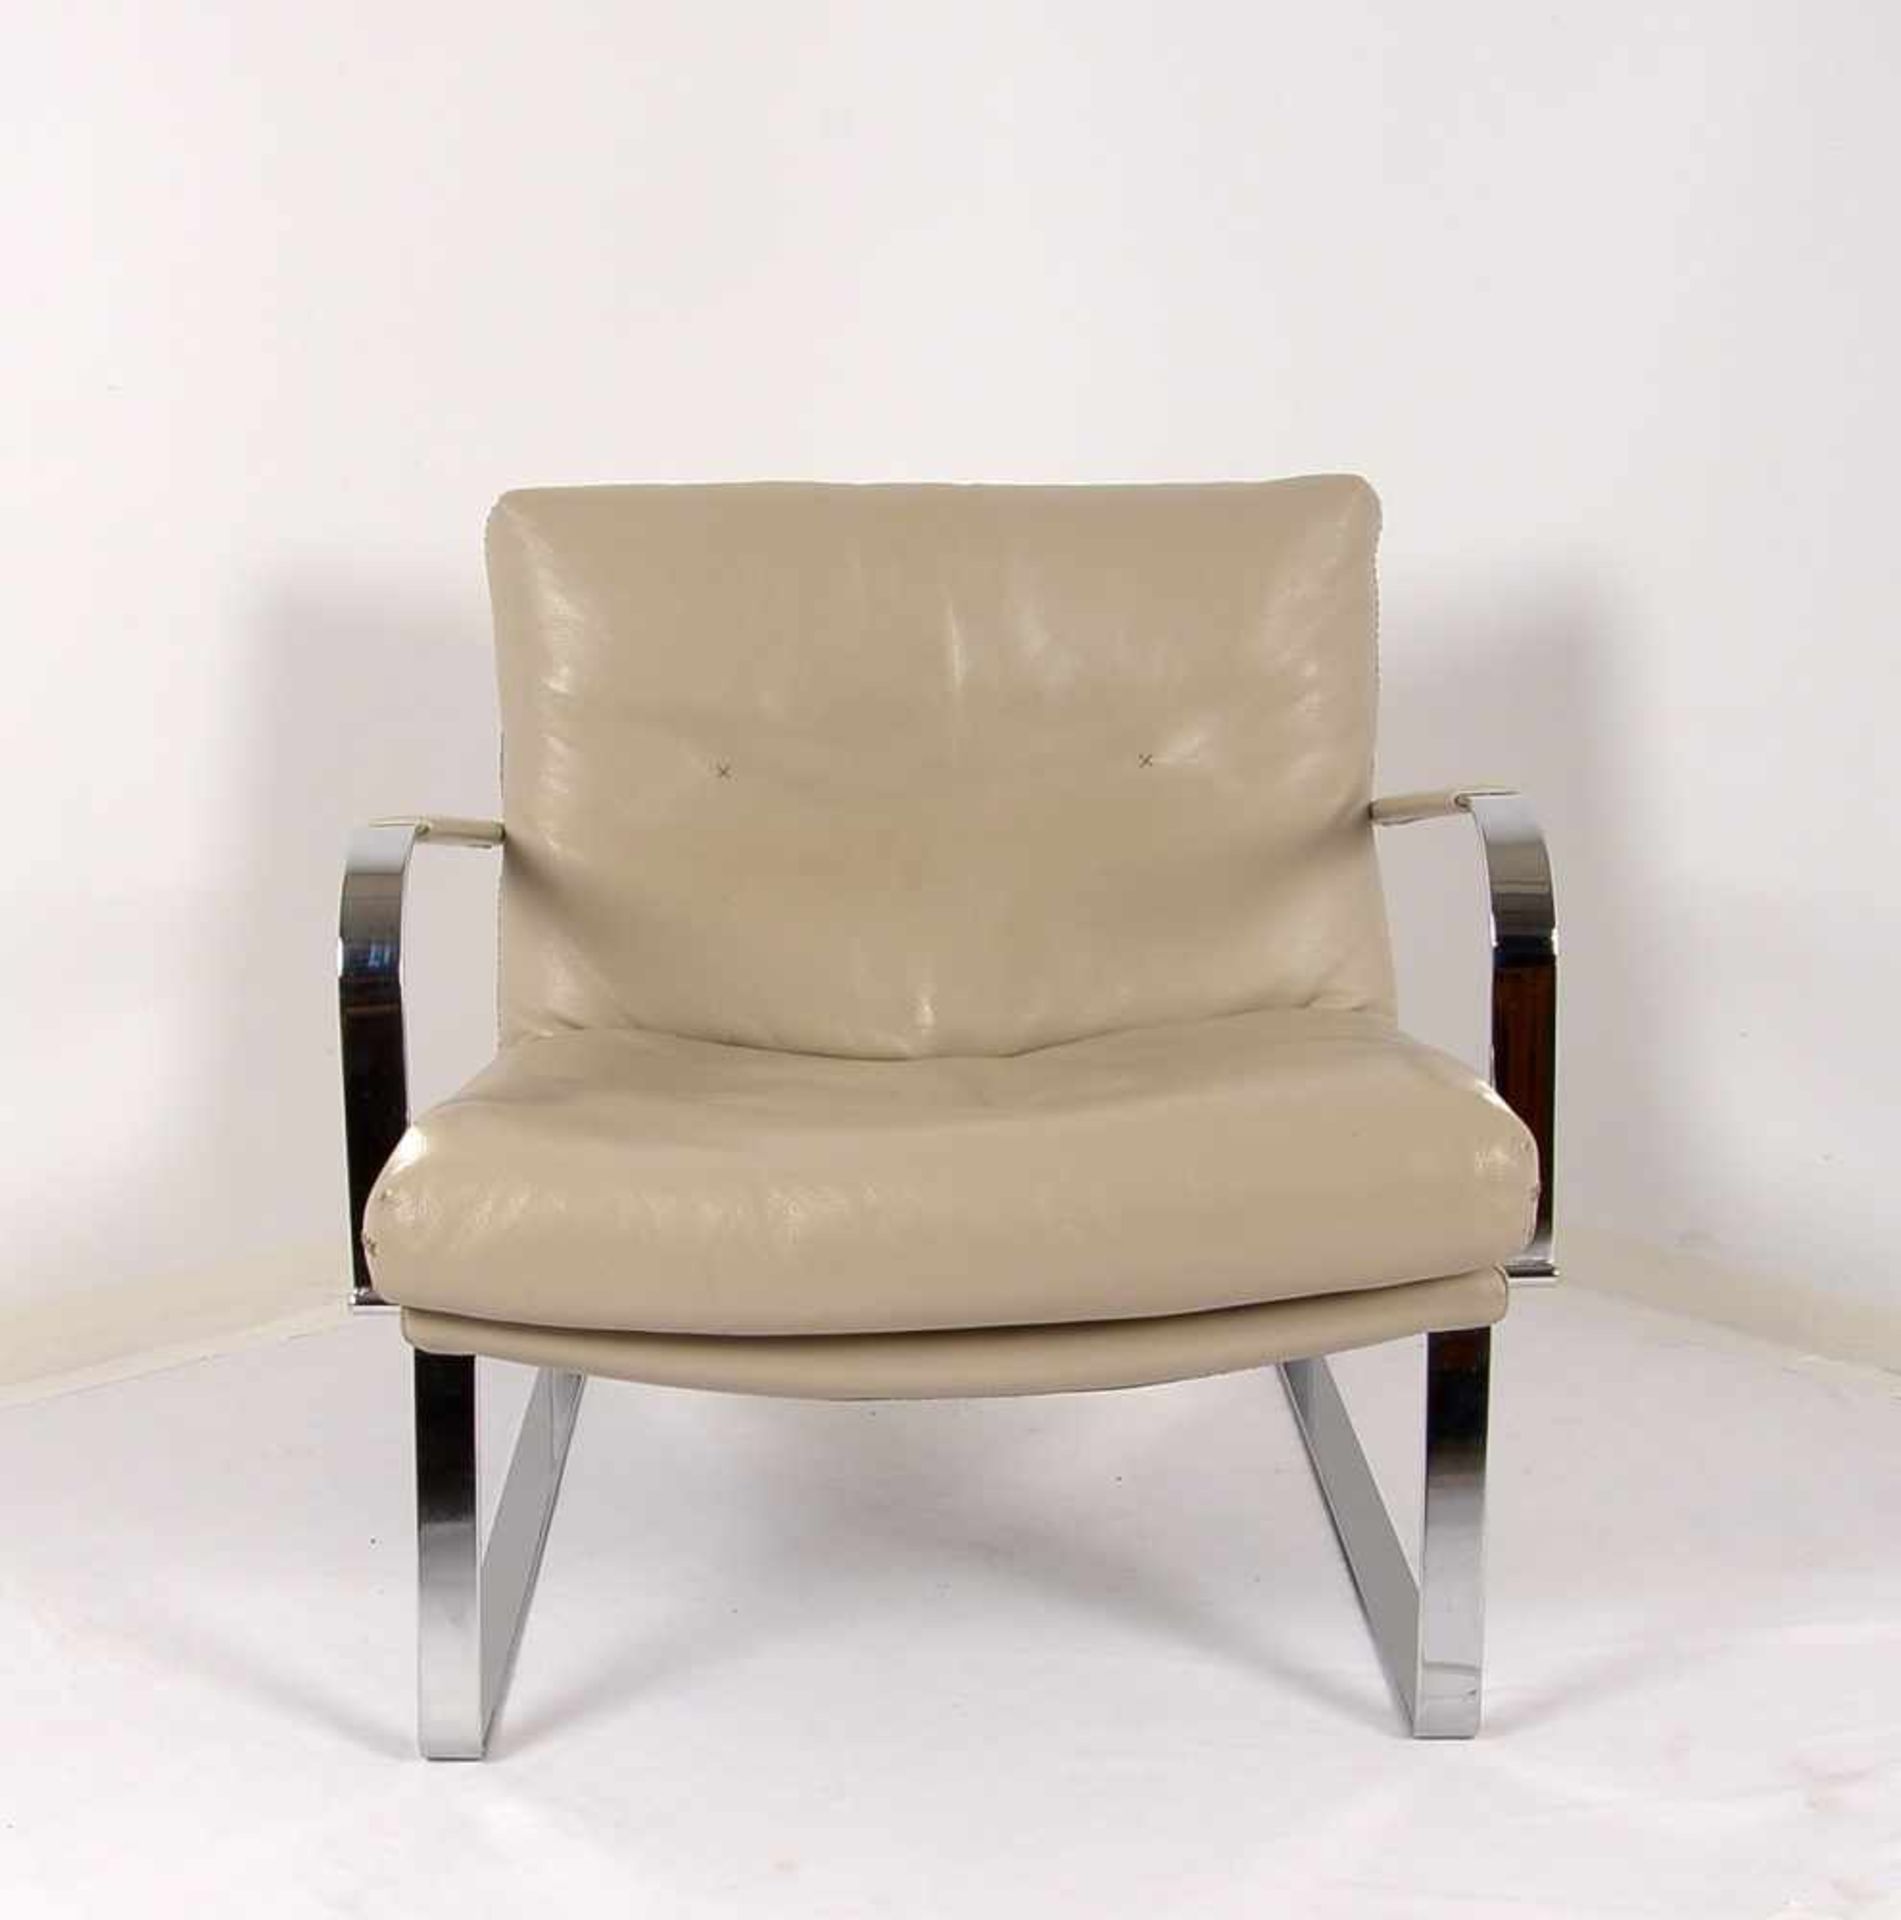 Armlehn-Chair, 'Conform', Chromgestell mit hell-kittfarbenem Leder, gepflegt/in gutem - Bild 2 aus 2